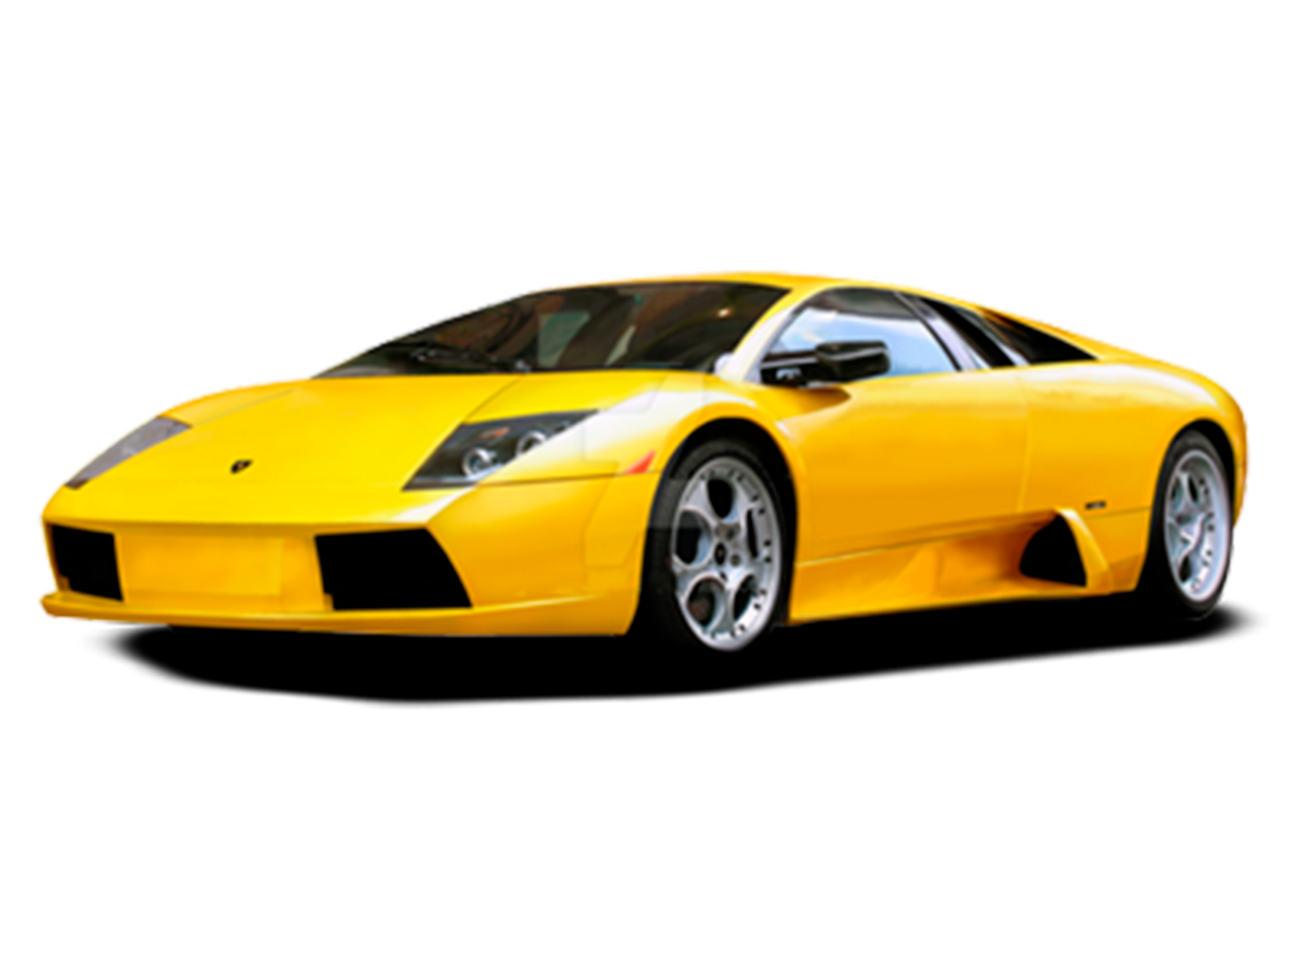 Tabela Fipe - Lamborghini Murcielago: Consulte preços do Modelo | Webmotors